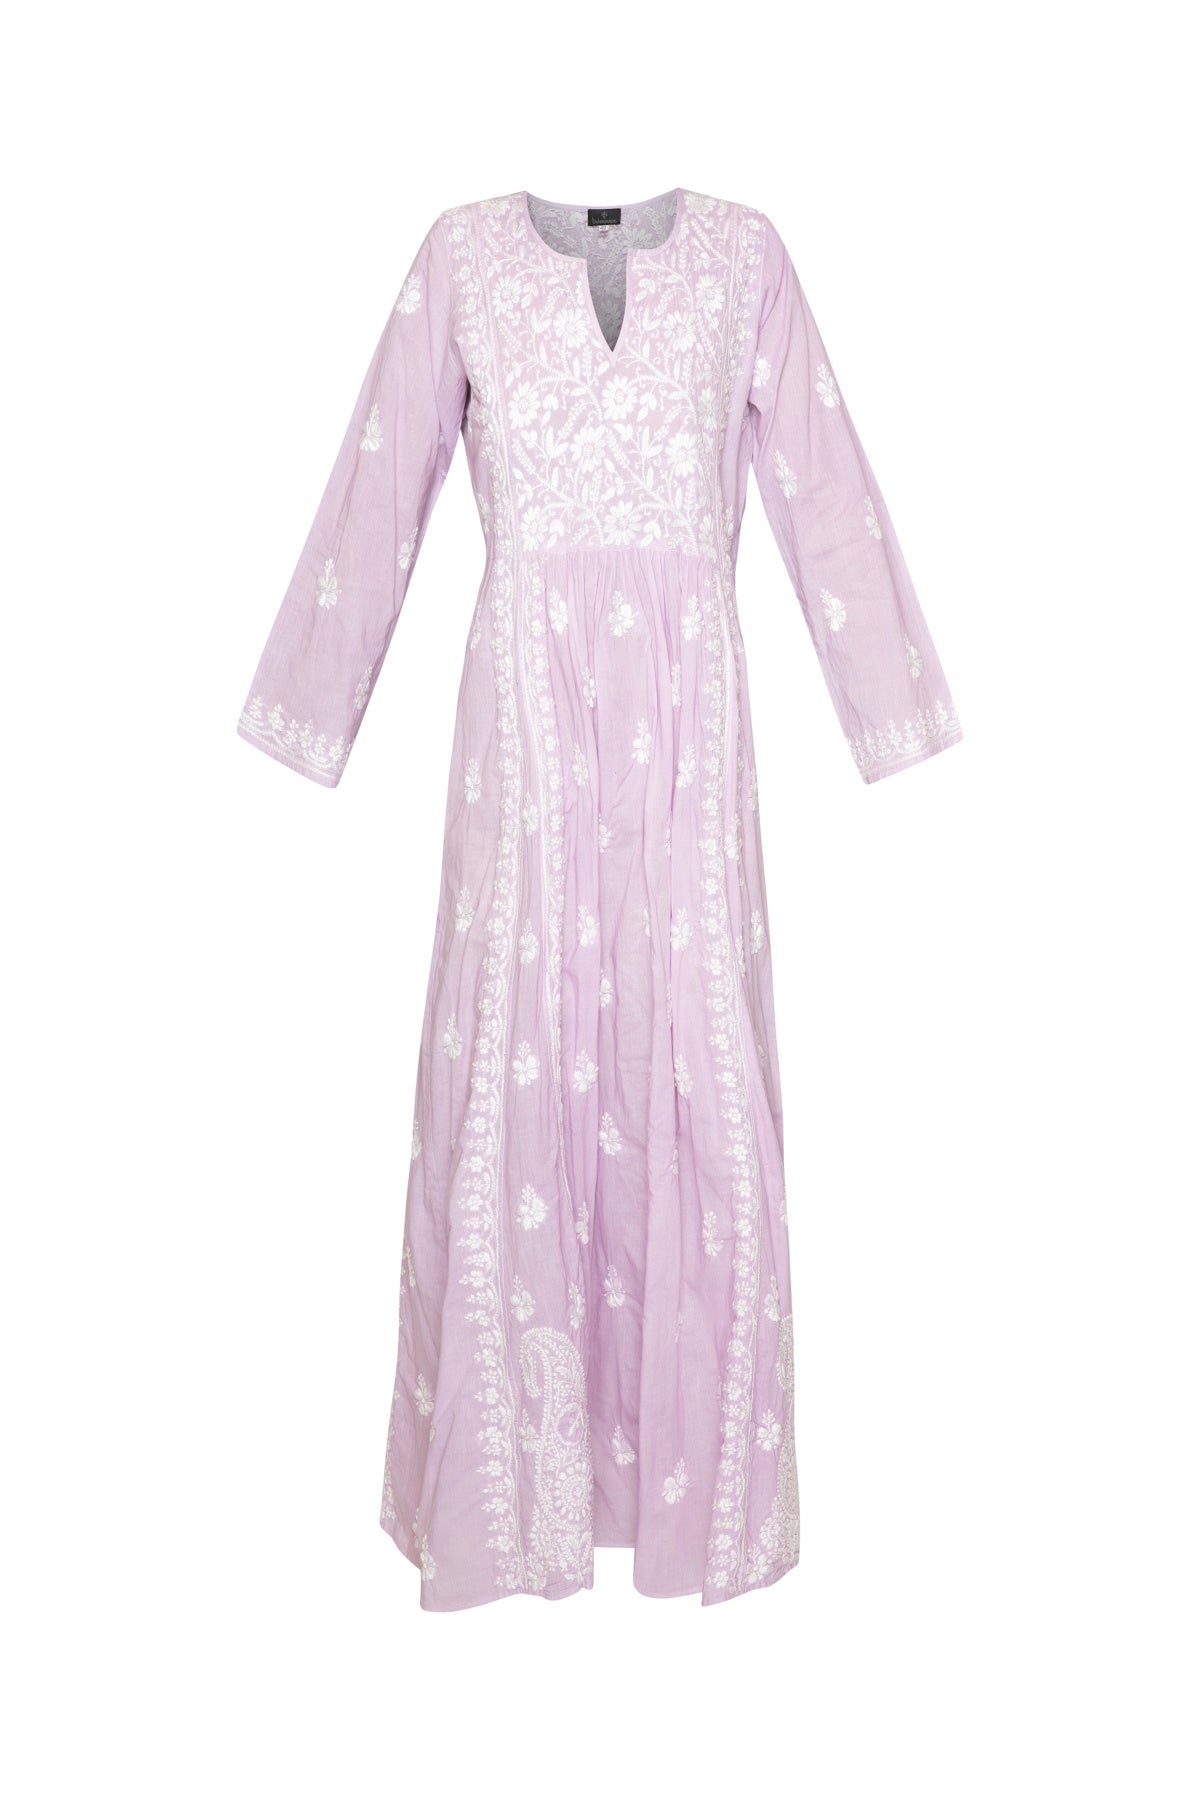 Cotton Embroidered Dress - Liliac